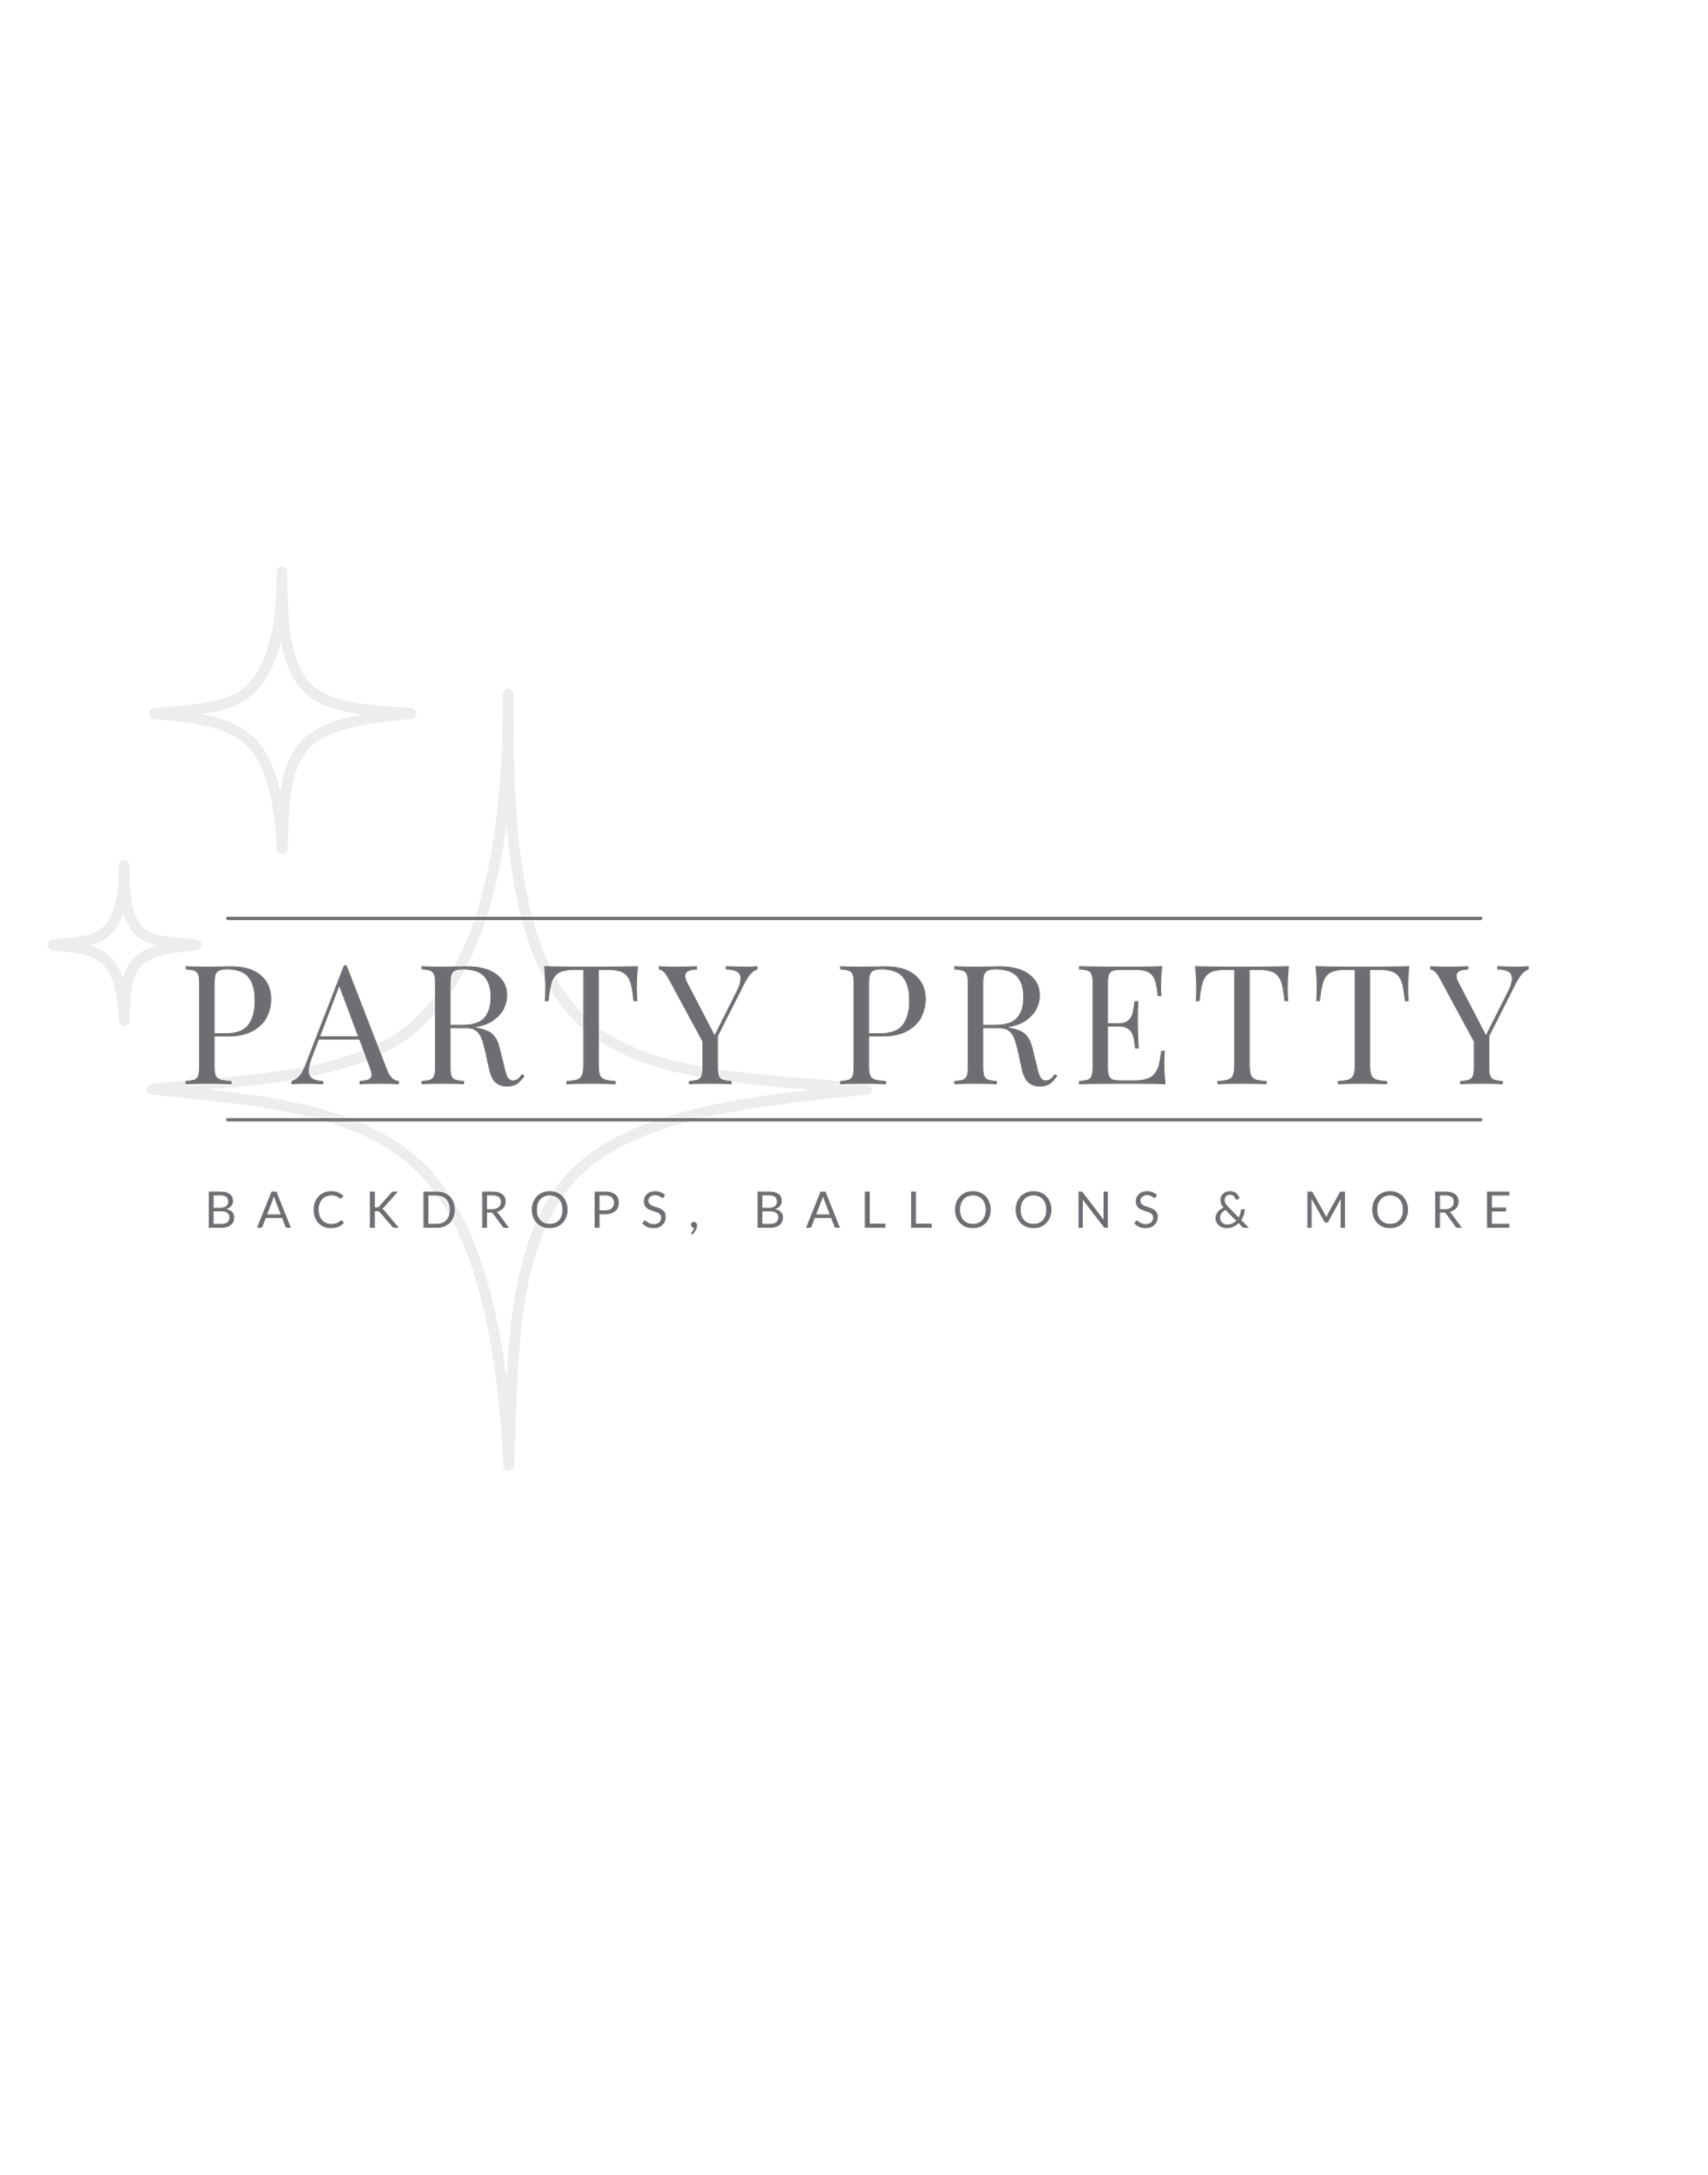 Party pretty (11 x 14 in)-1